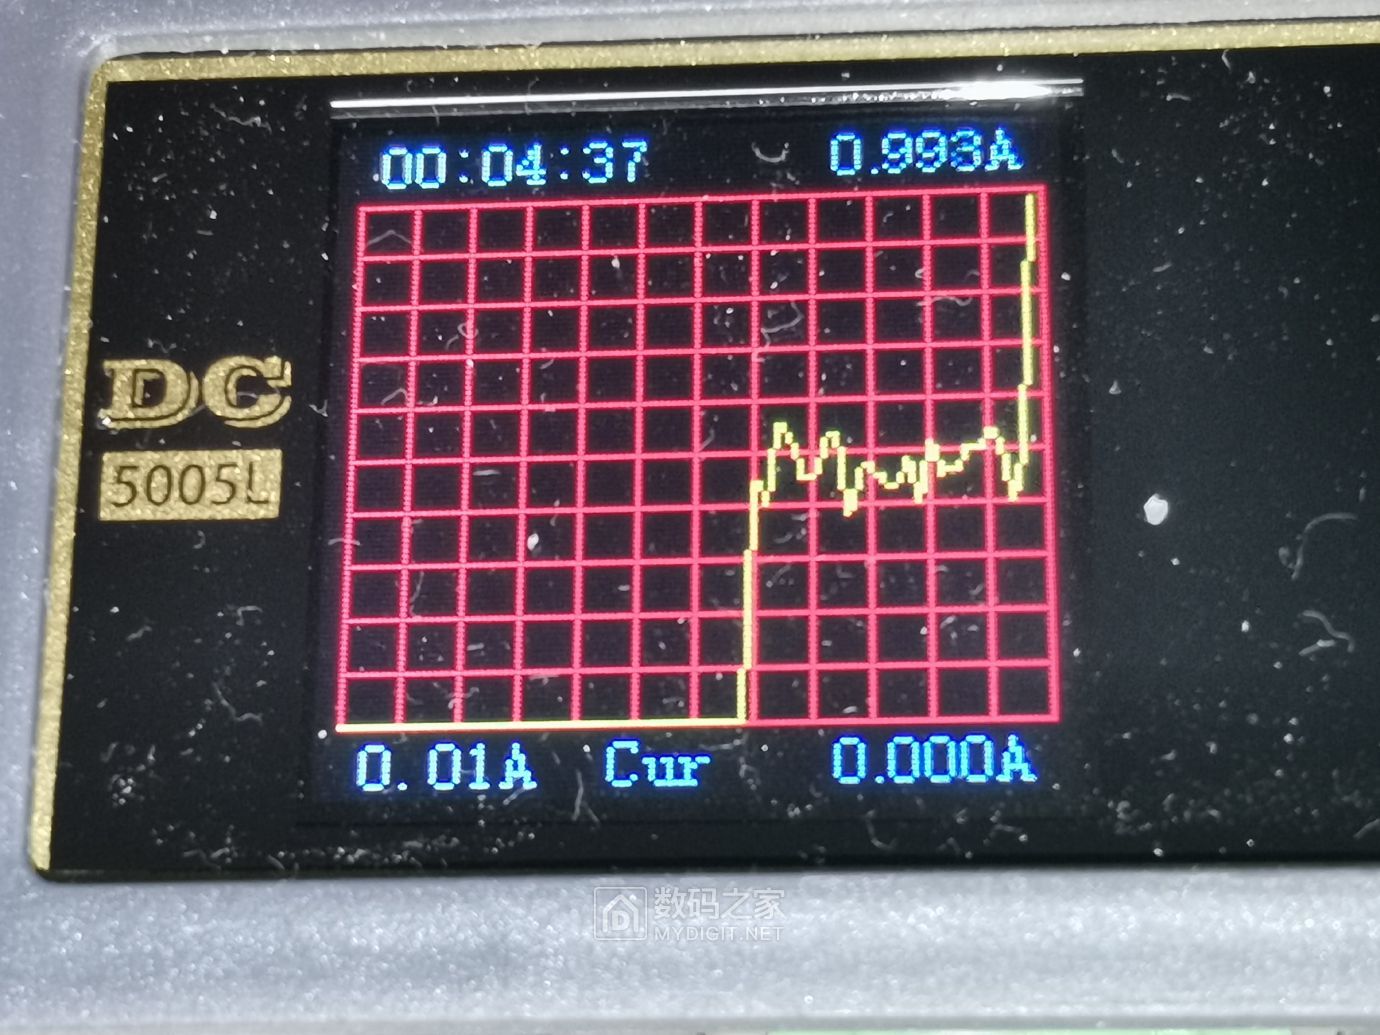 DC5005L电源模块评测07_试用15.jpg